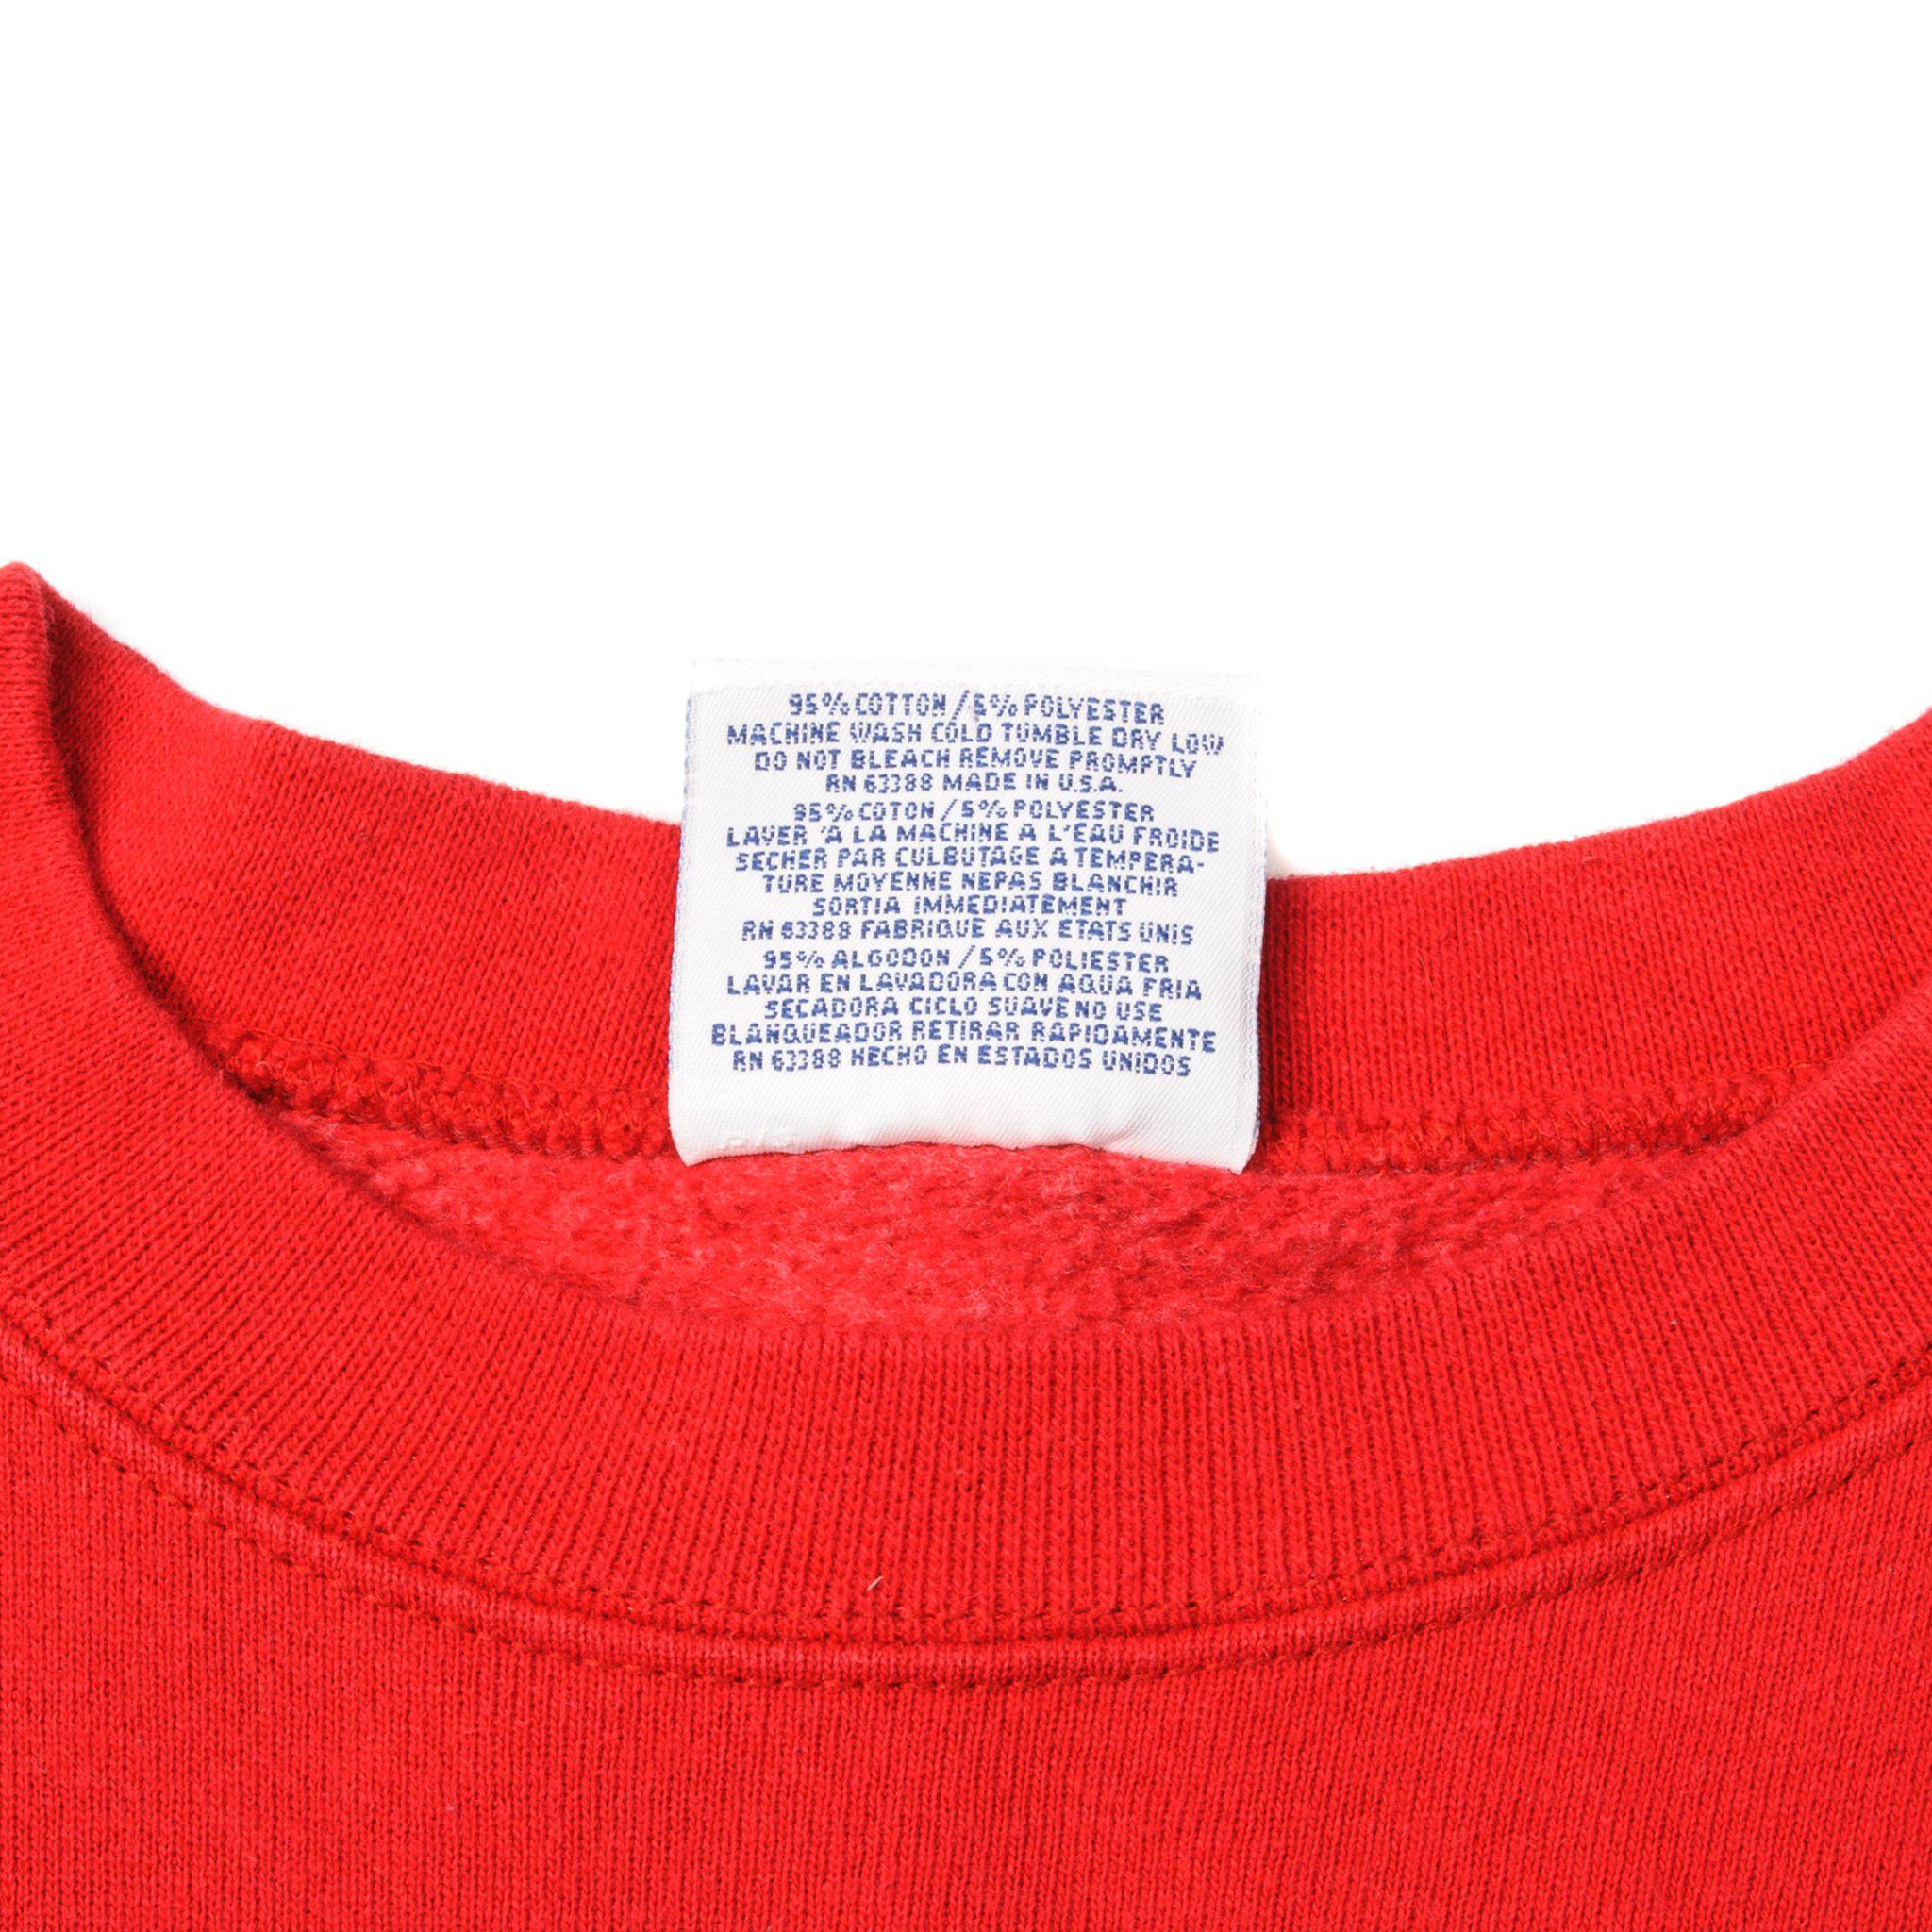 Sweatshirt NBA Red size L International in Cotton - 30790219